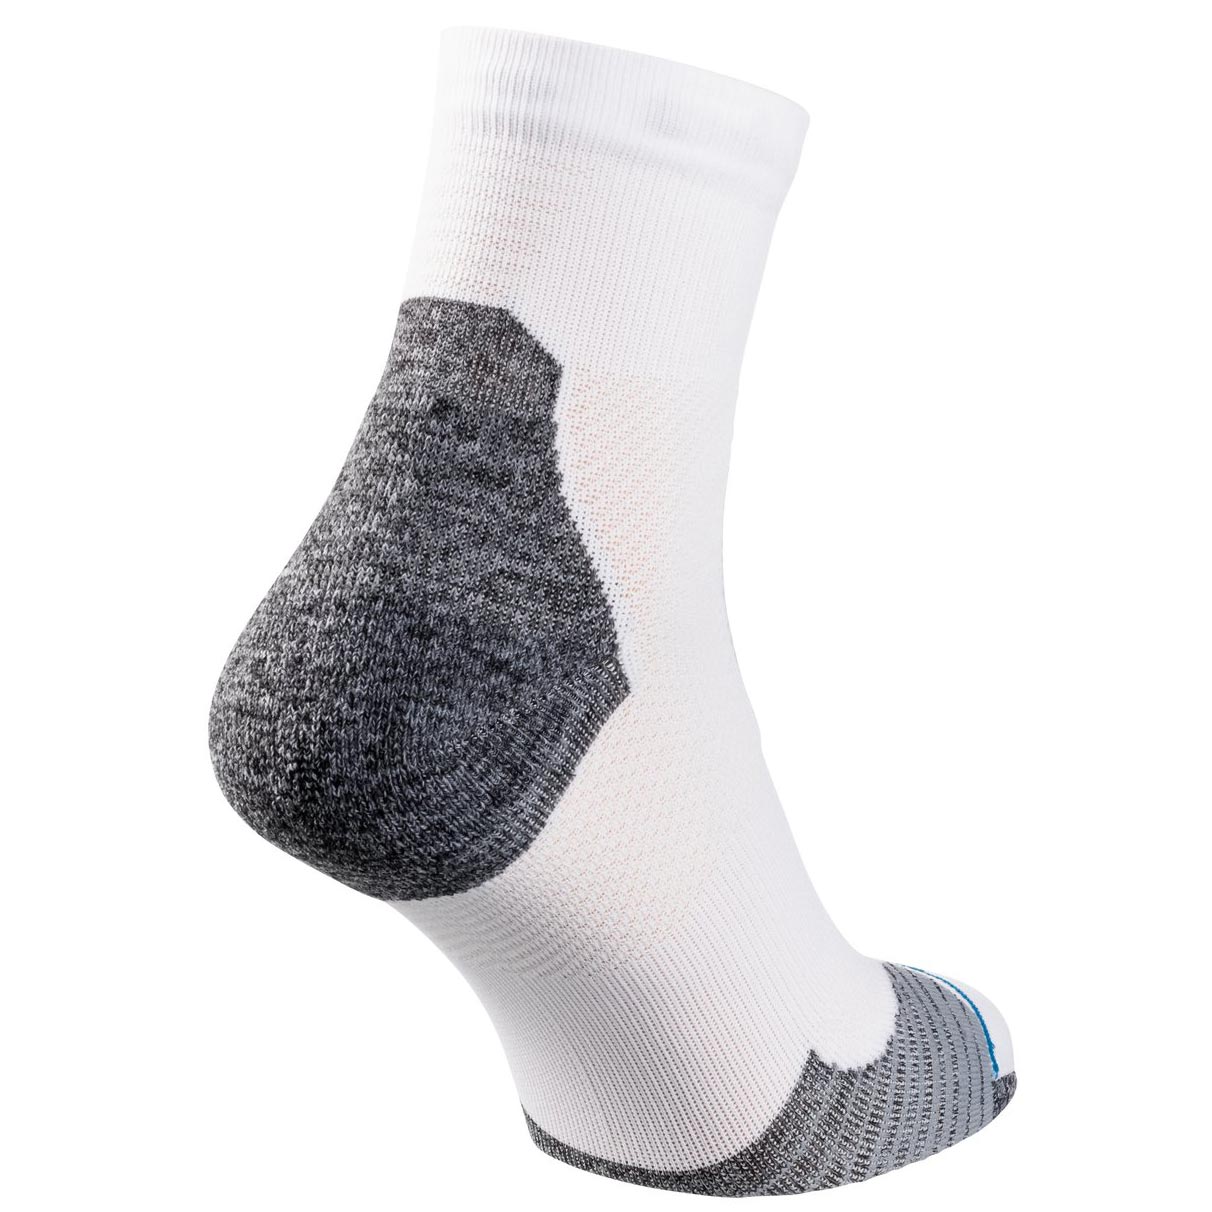 Odlo Ceramicool Stabilizer Quarter Socks - white